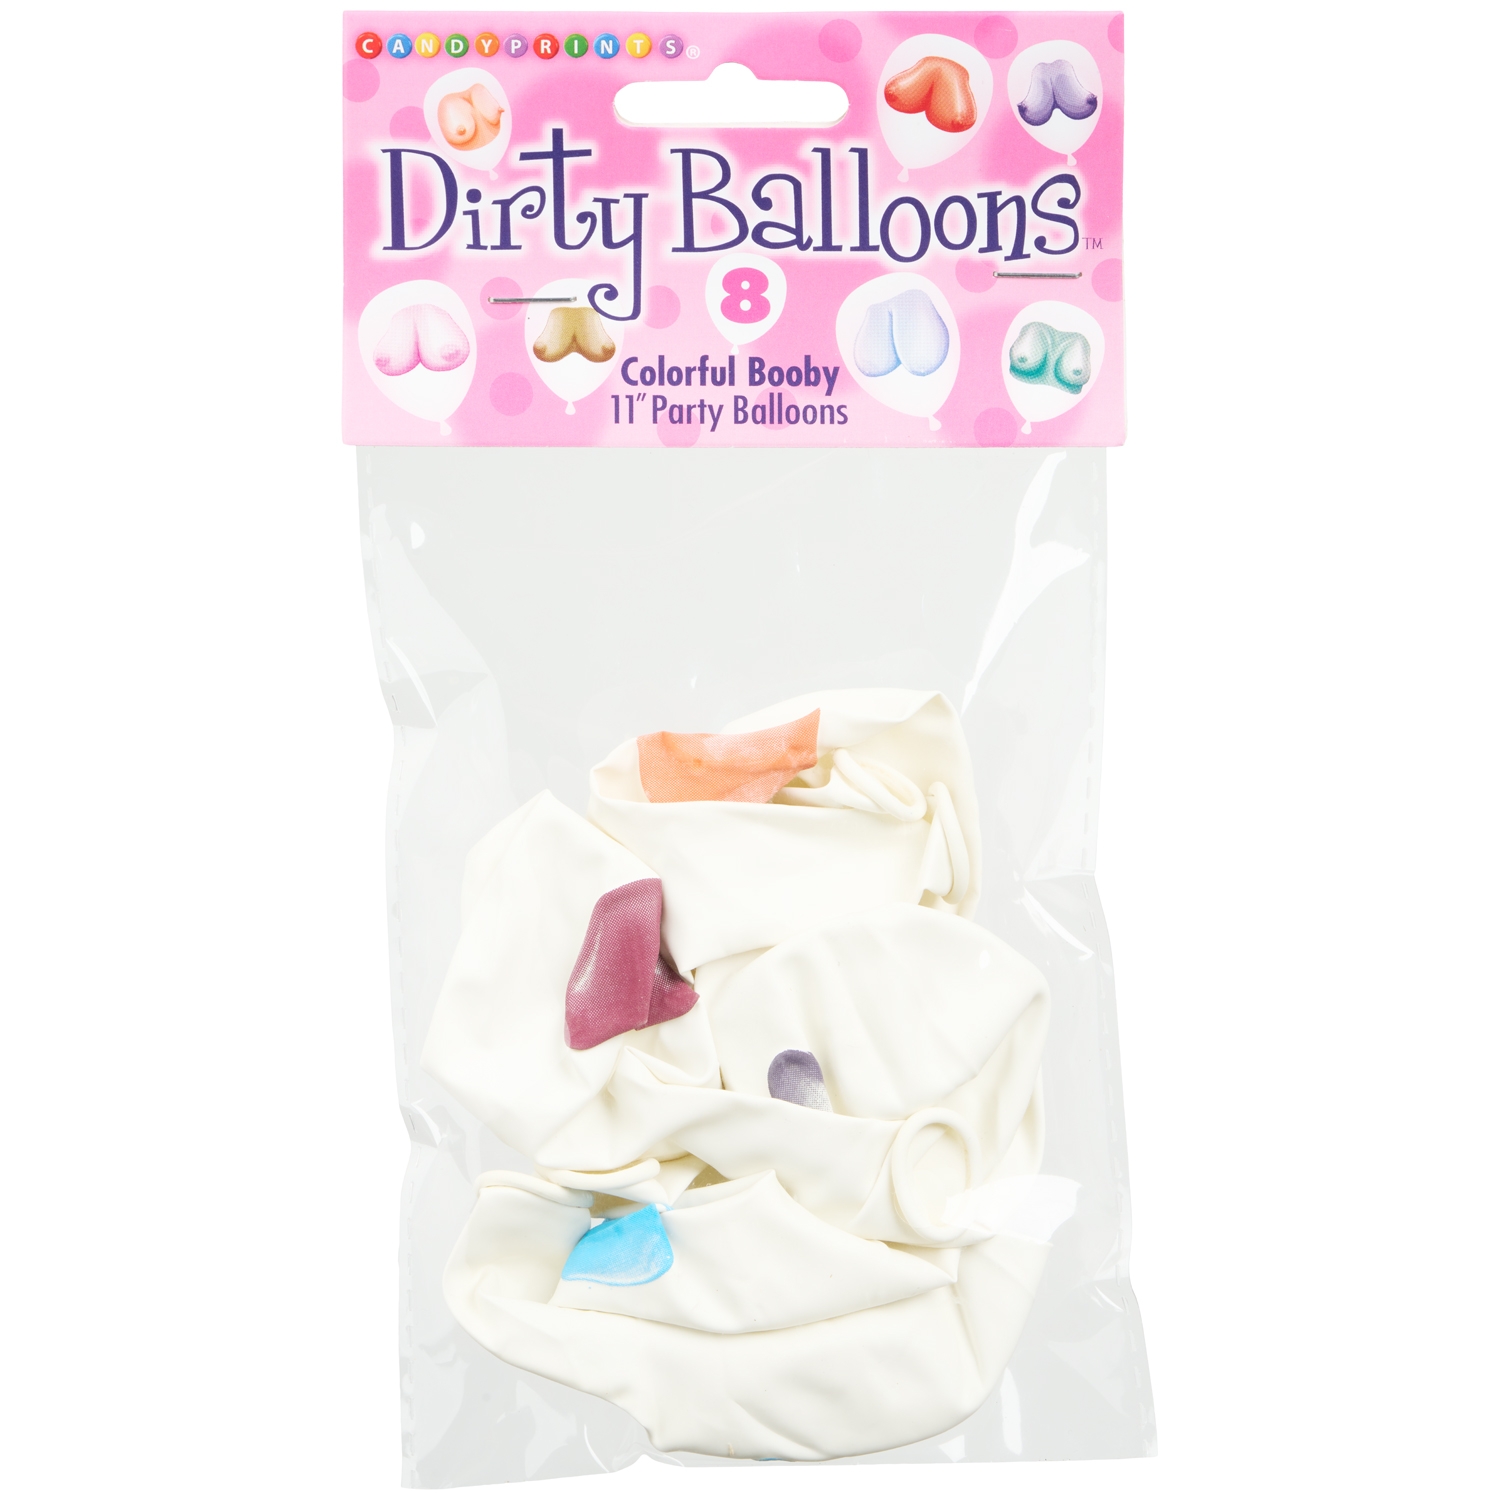 Little Genie Dirty Boob Balloner - White